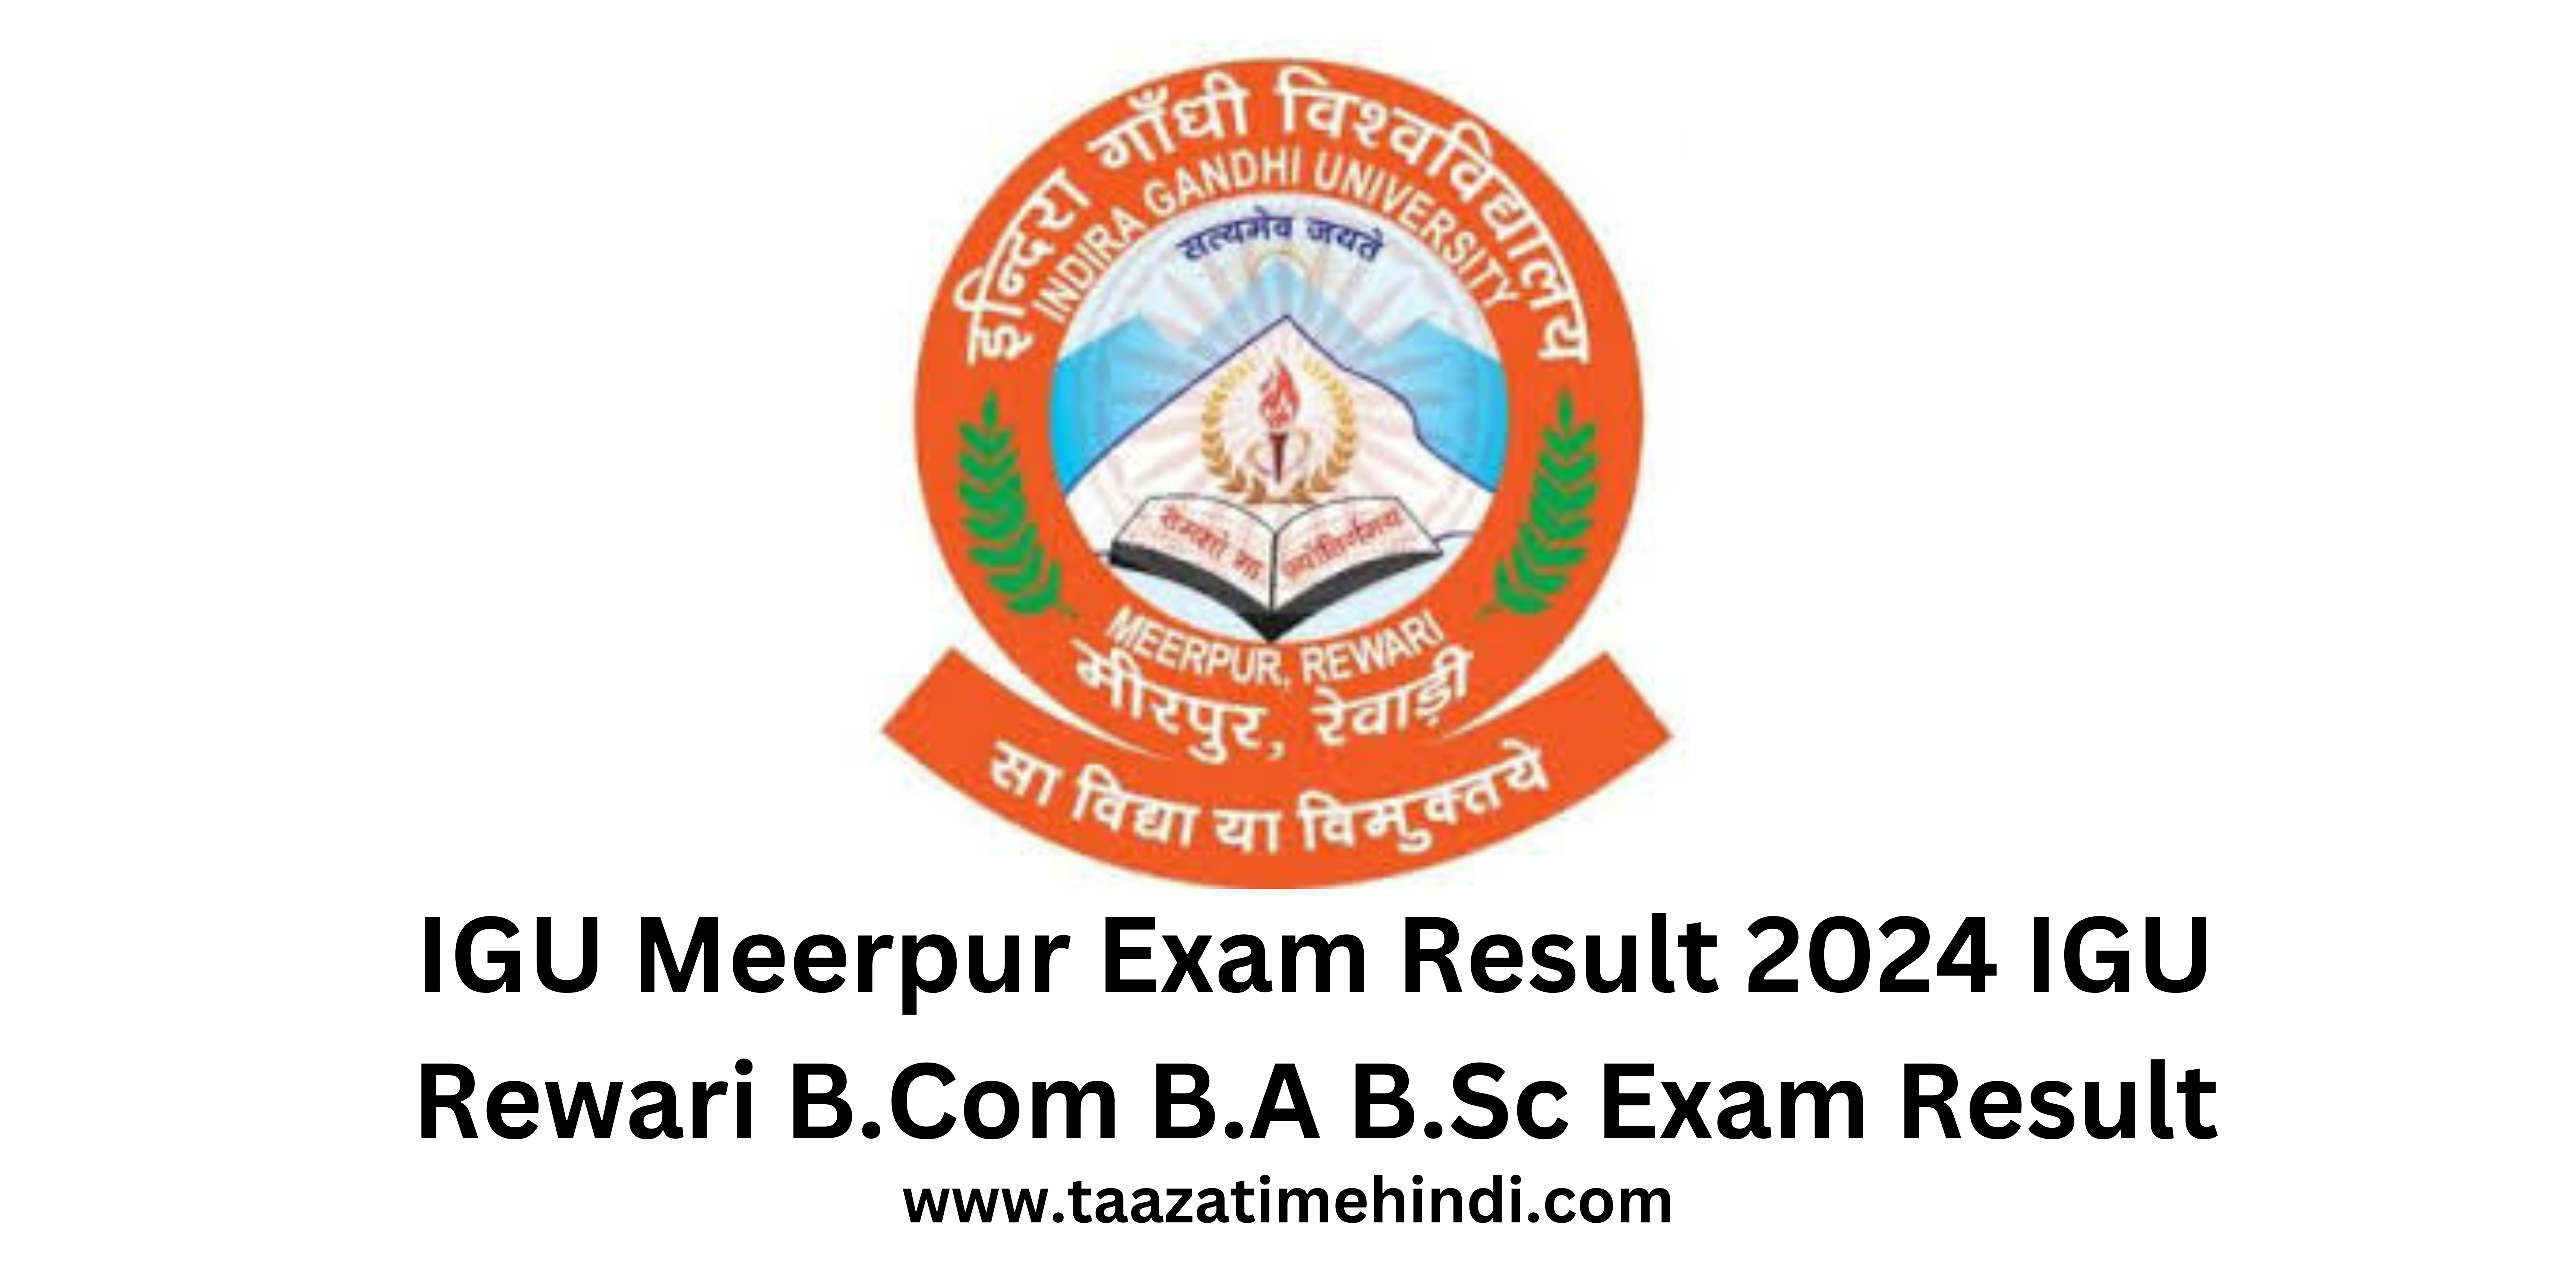 IGU Meerpur Exam Result 2024 IGU Rewari B.Com B.A B.Sc Exam Result